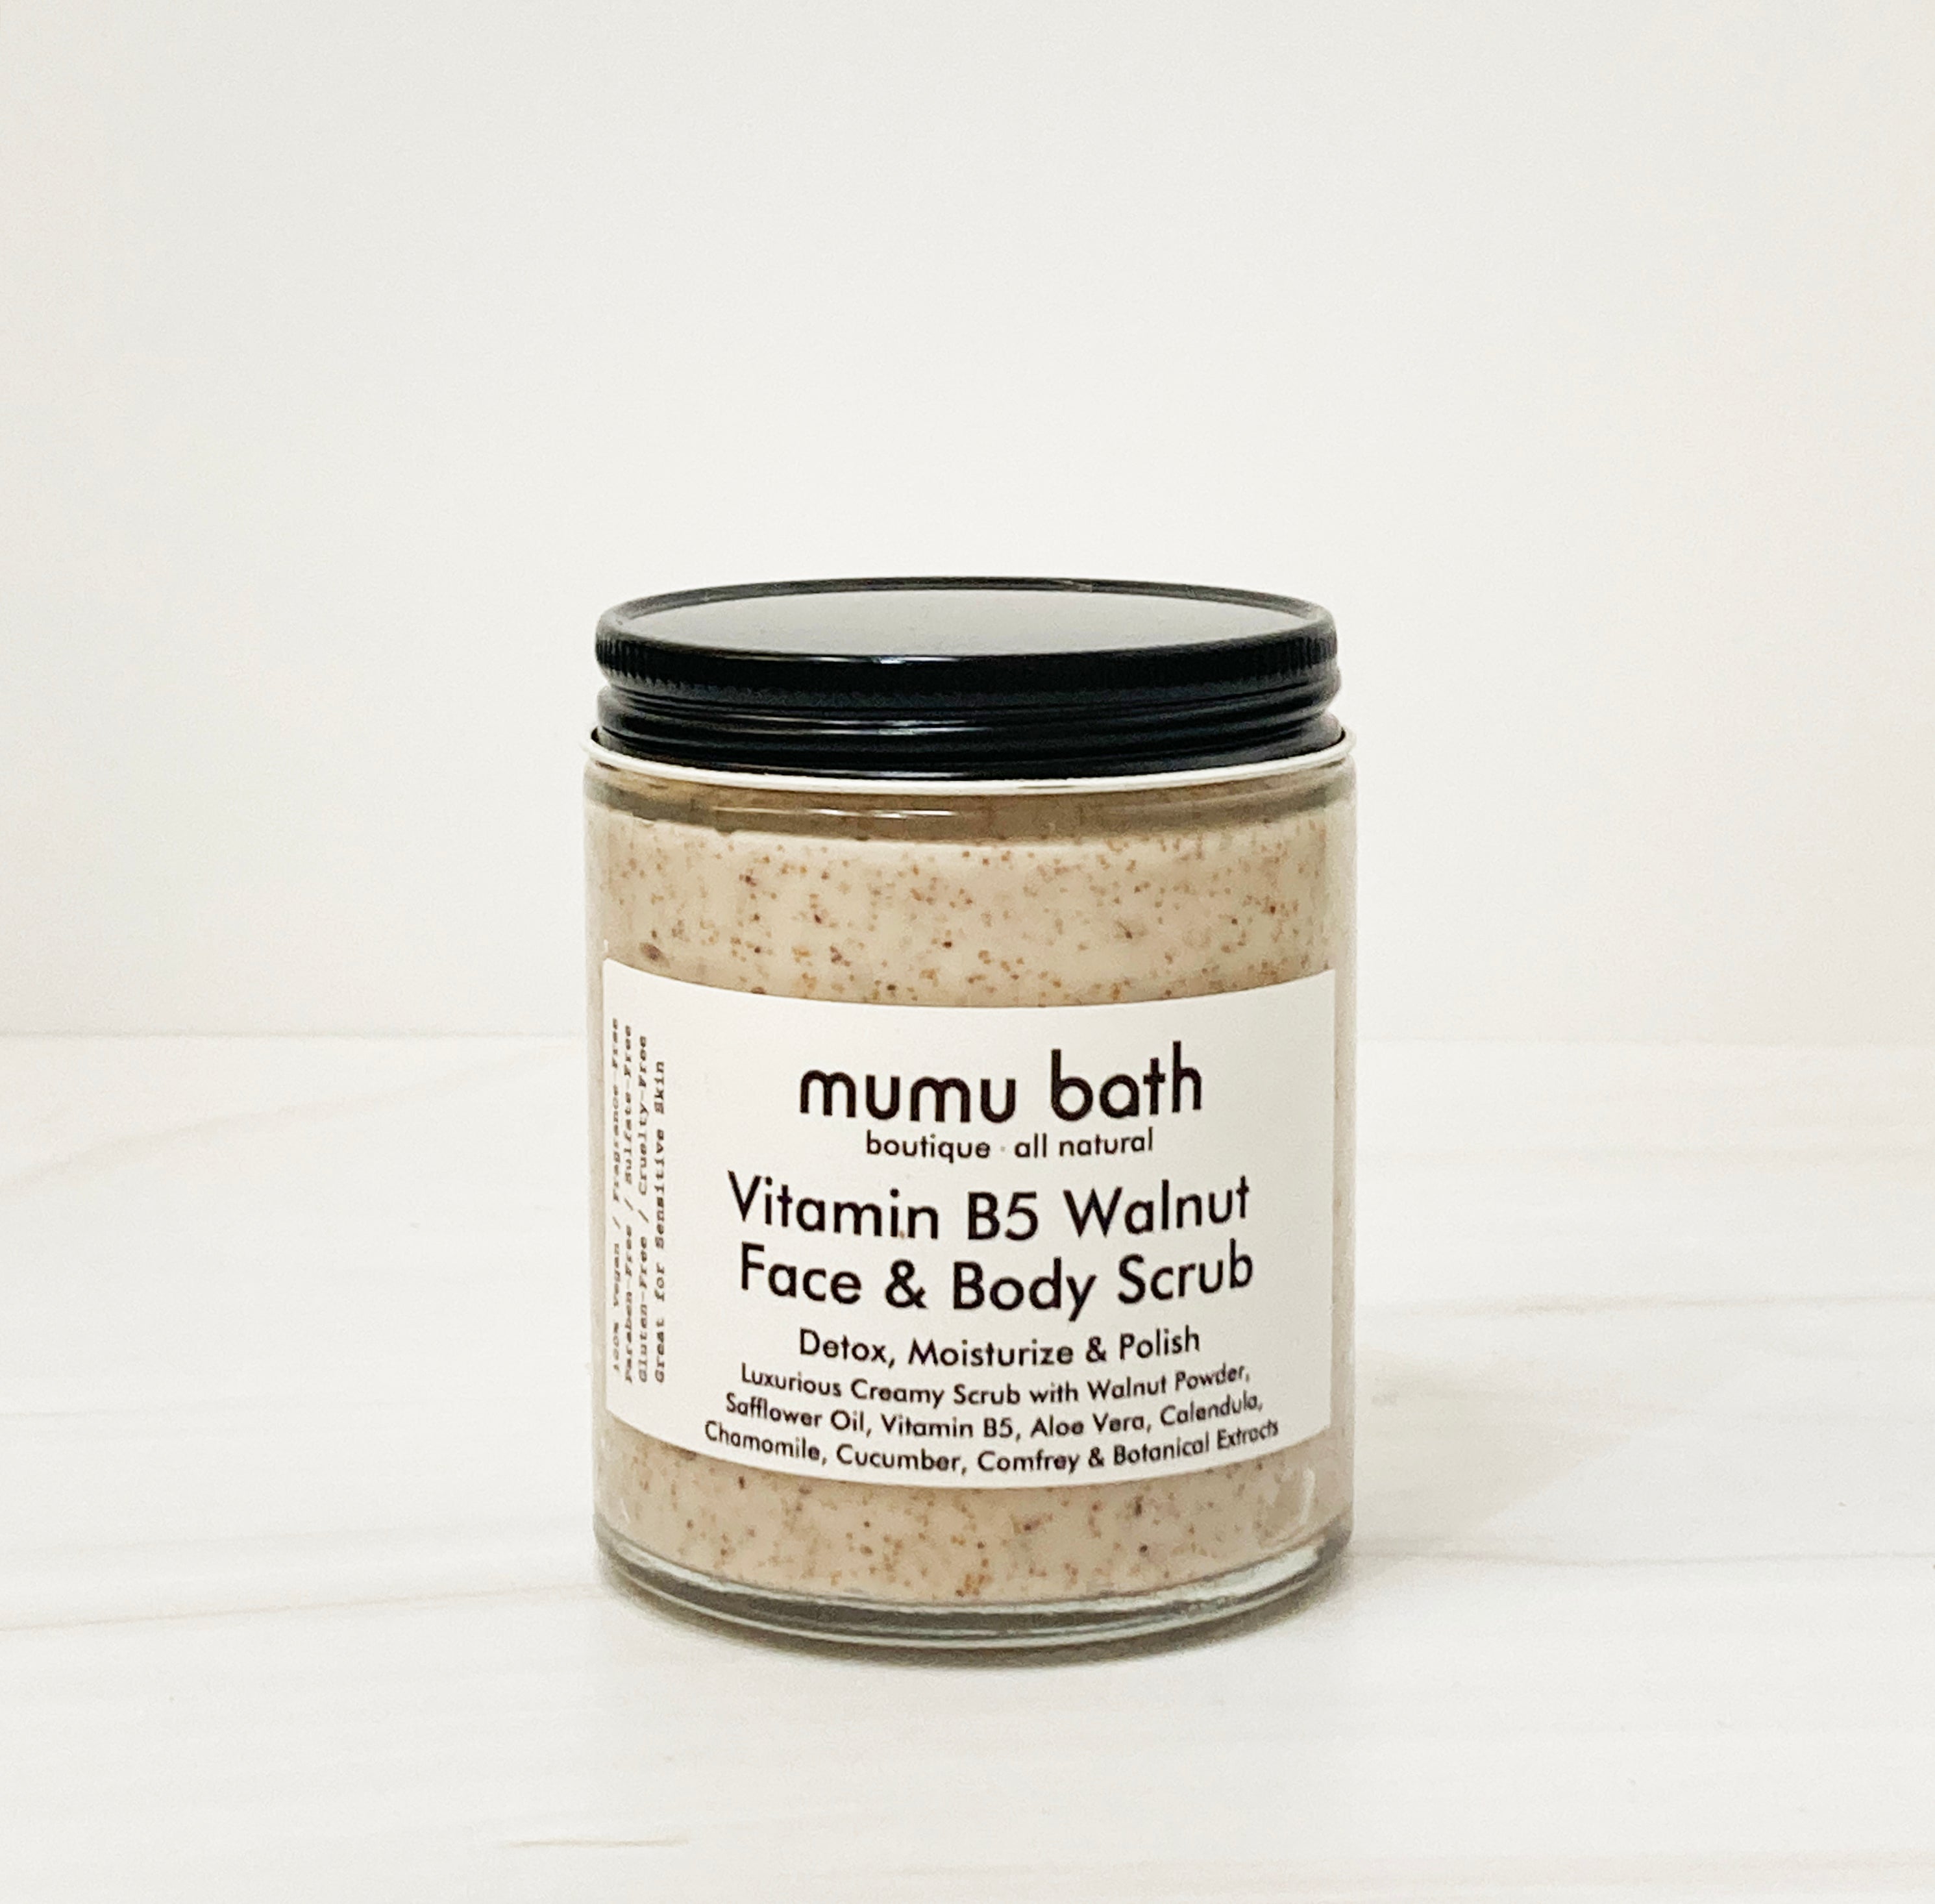 Vitamin B5 Walnut Face & Body Scrub: Revitalize Your Skin and Spirit